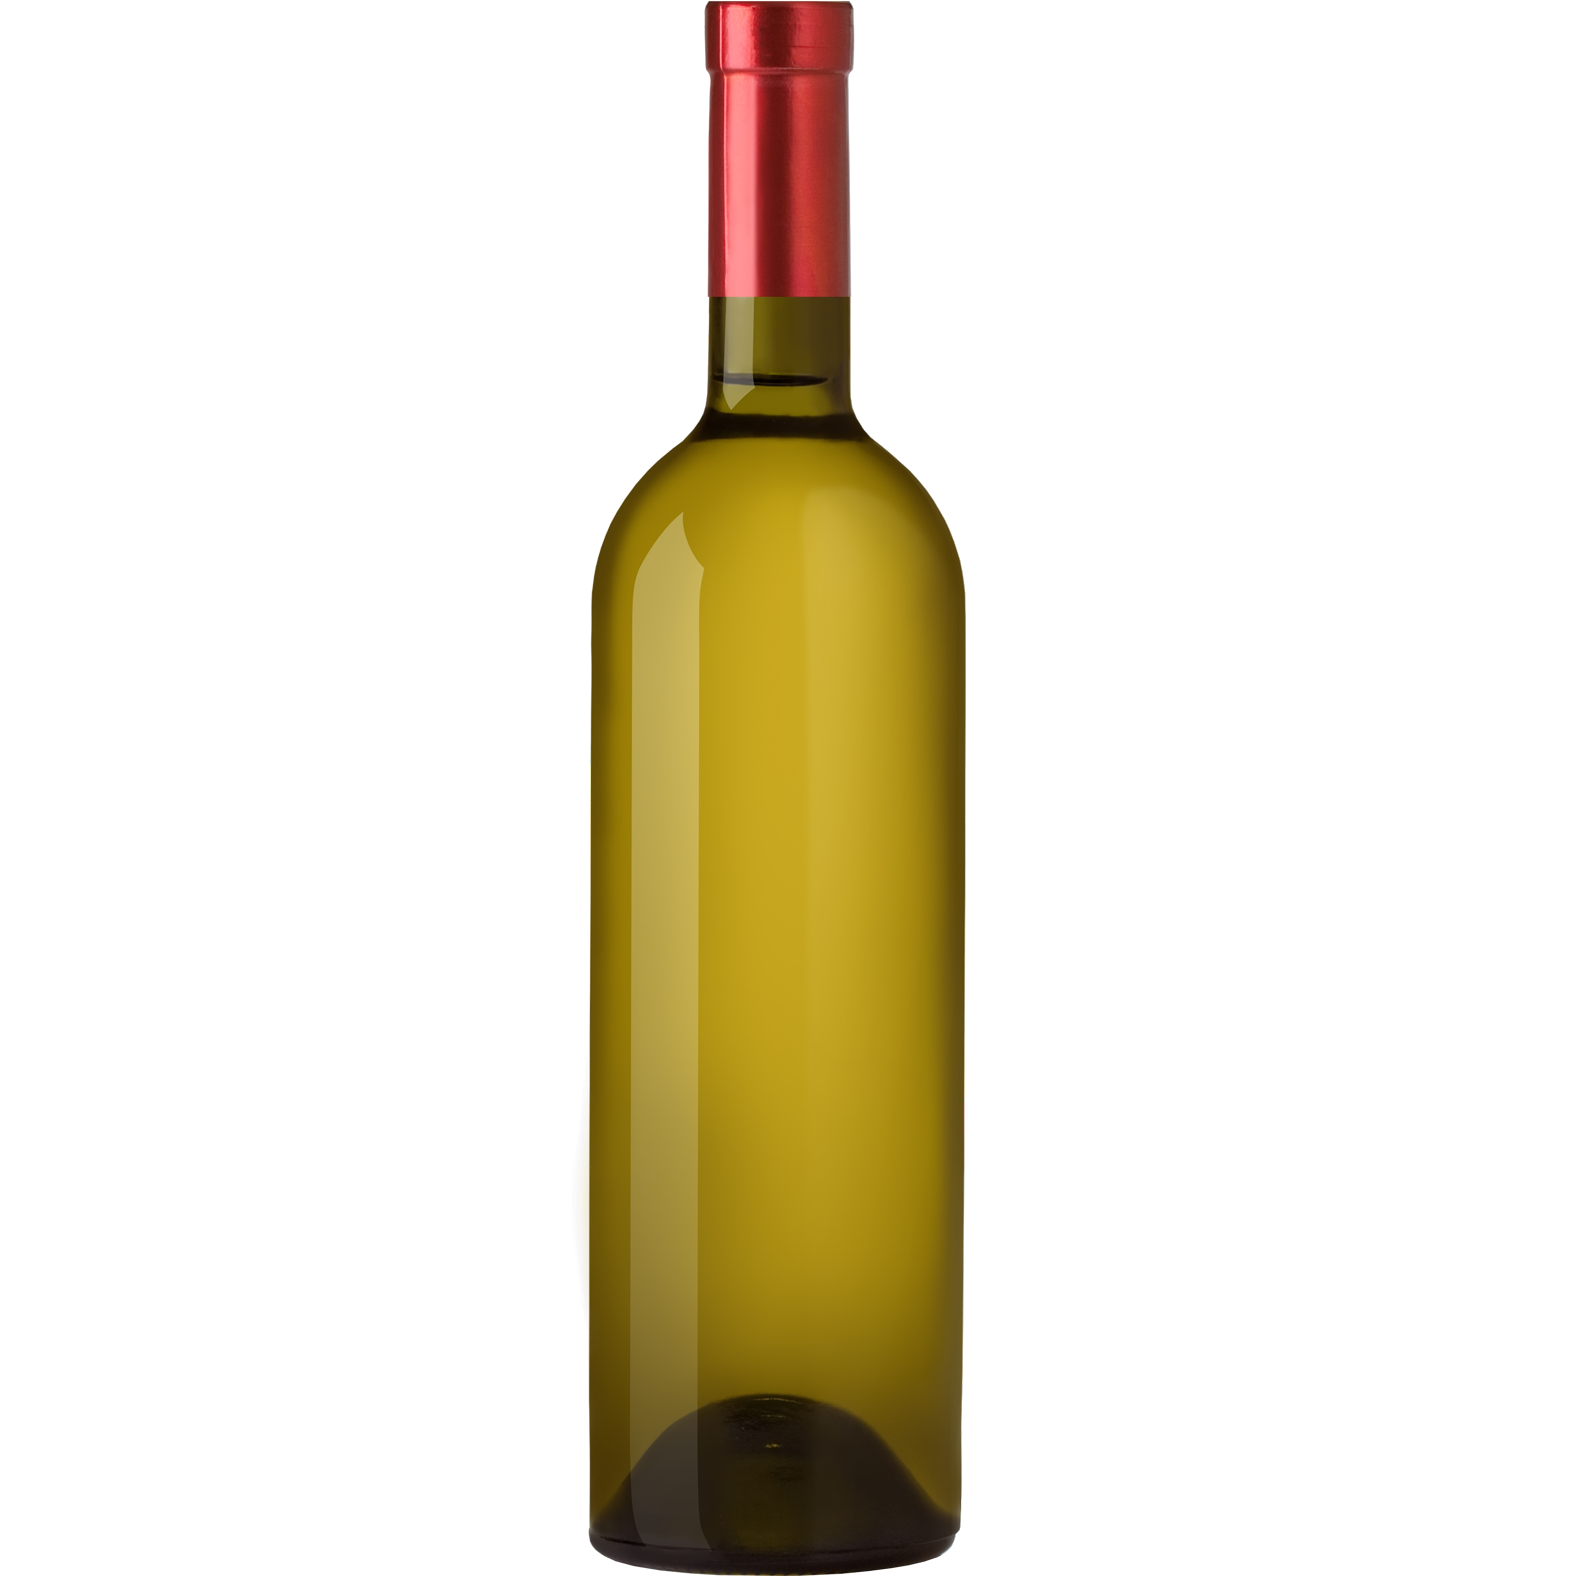 White wine image